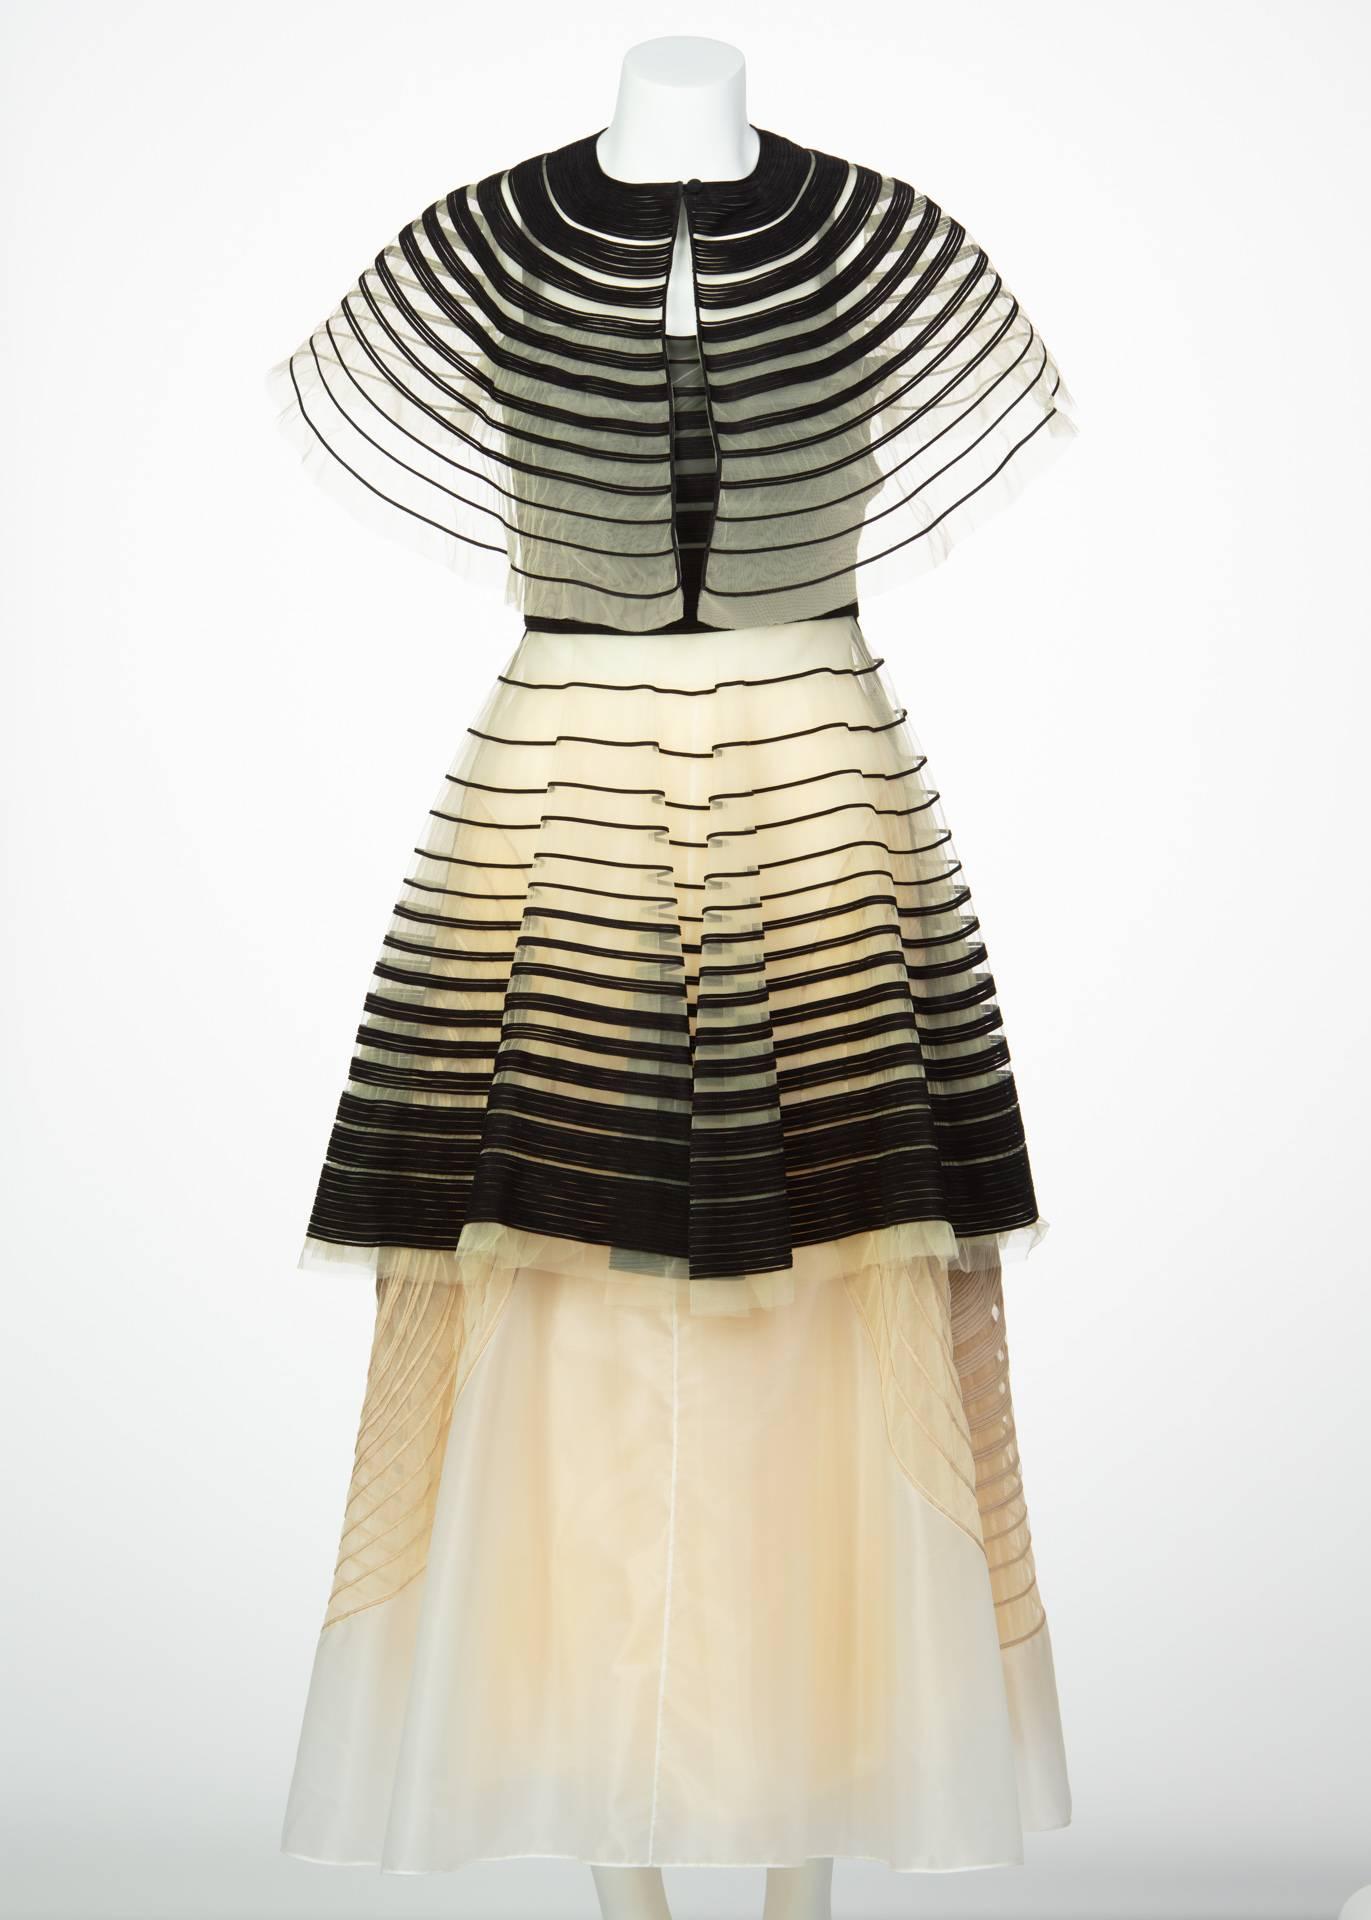 Beige Fendi Karl Lagerfeld S/S 2008 Runway Black Cut Out Suede Dress Cape Skirt Set For Sale